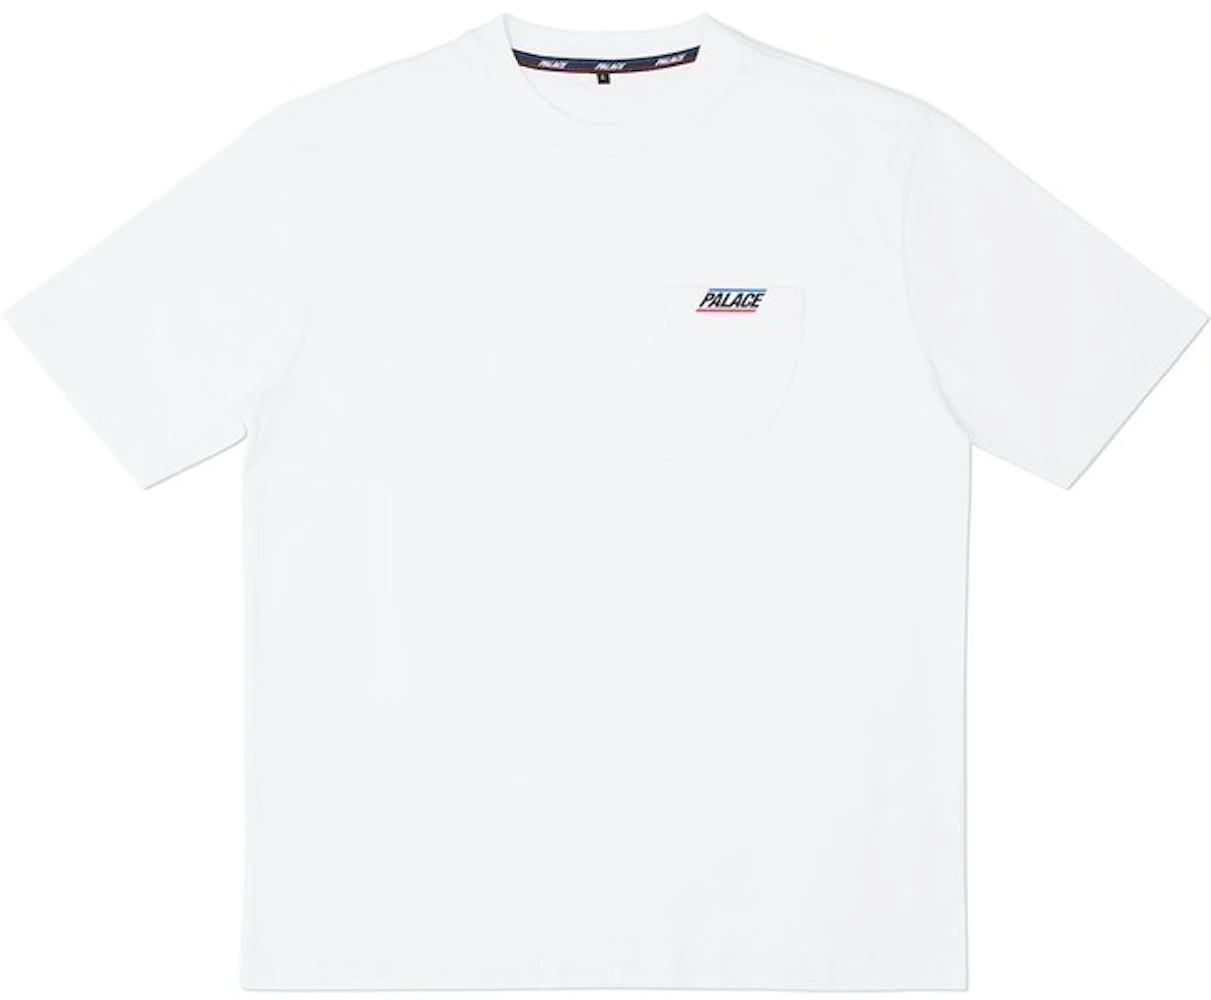 Palace Basically A (SS20) T-Shirt White Men's - SS20 - US